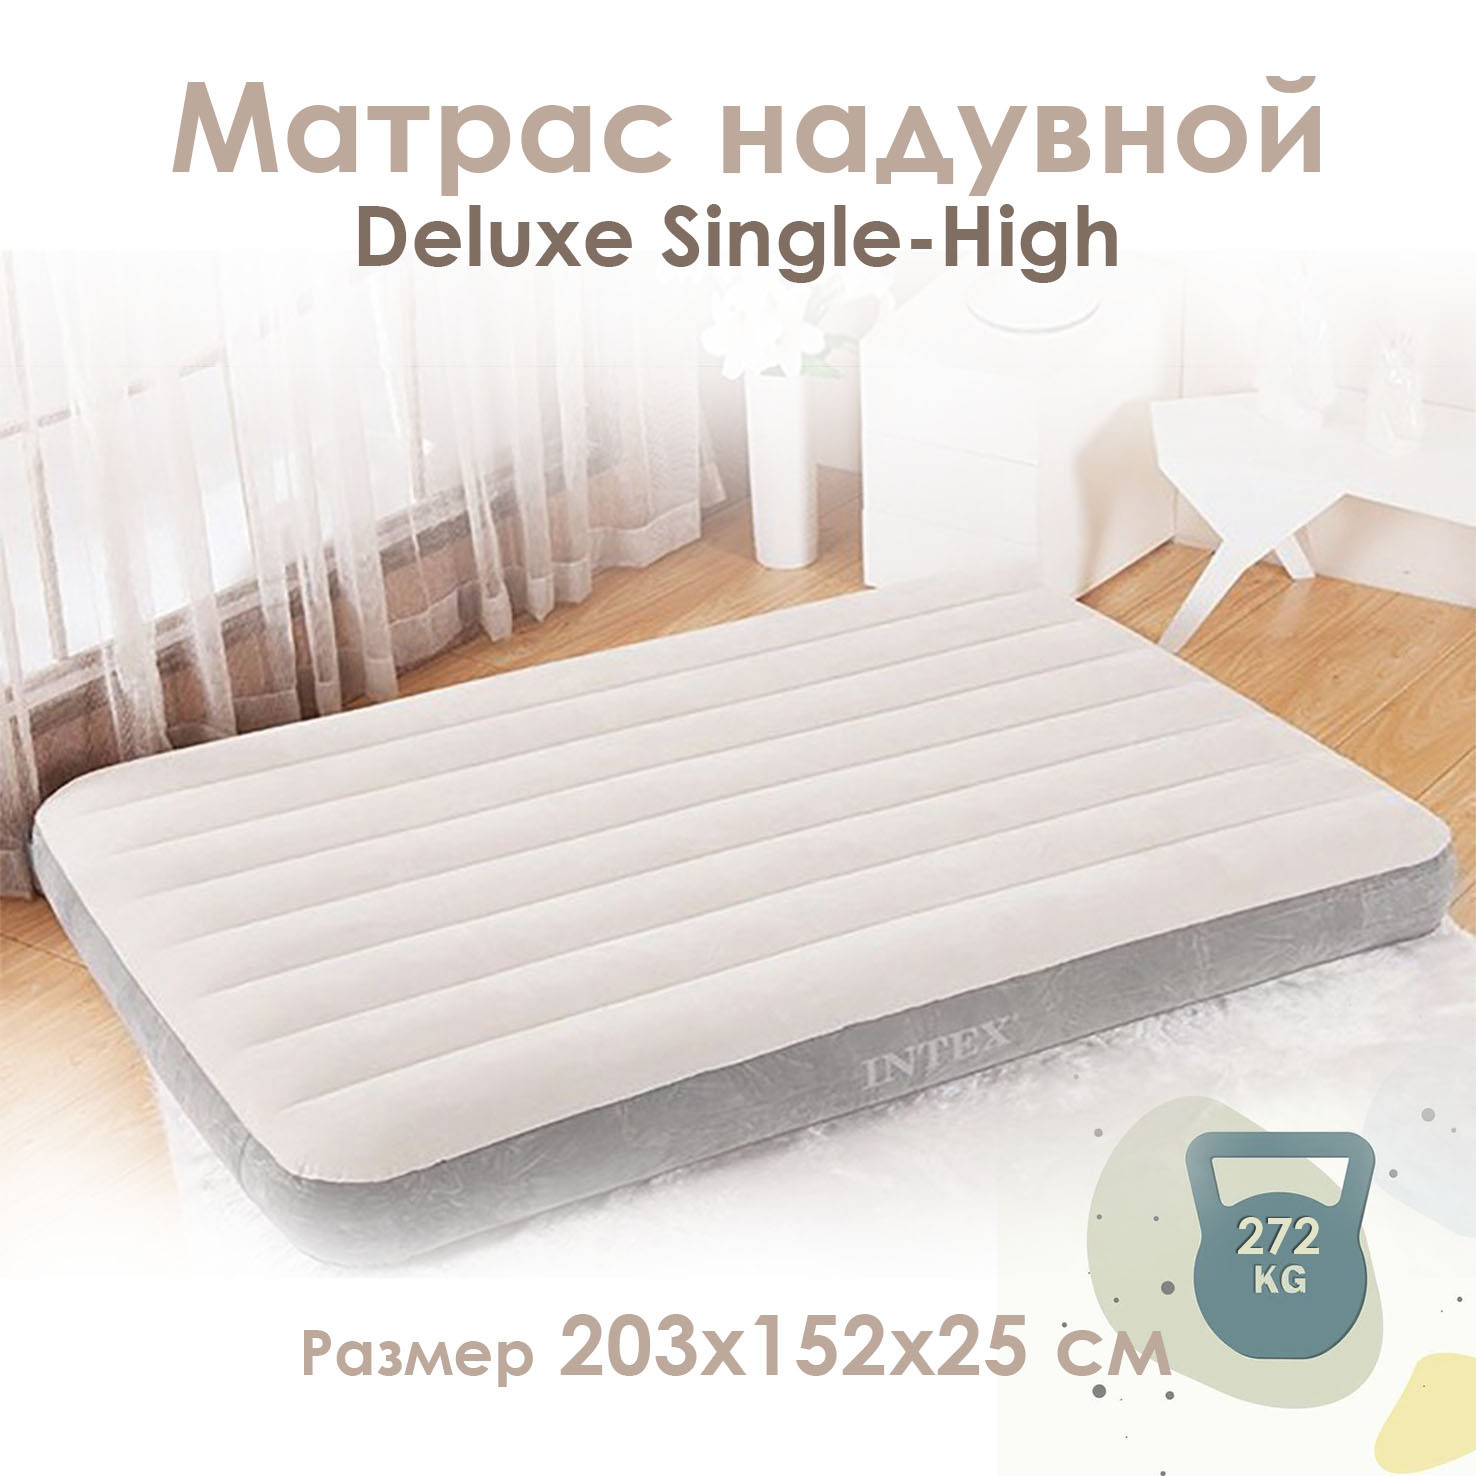 надувной матрас intex deluxe single high